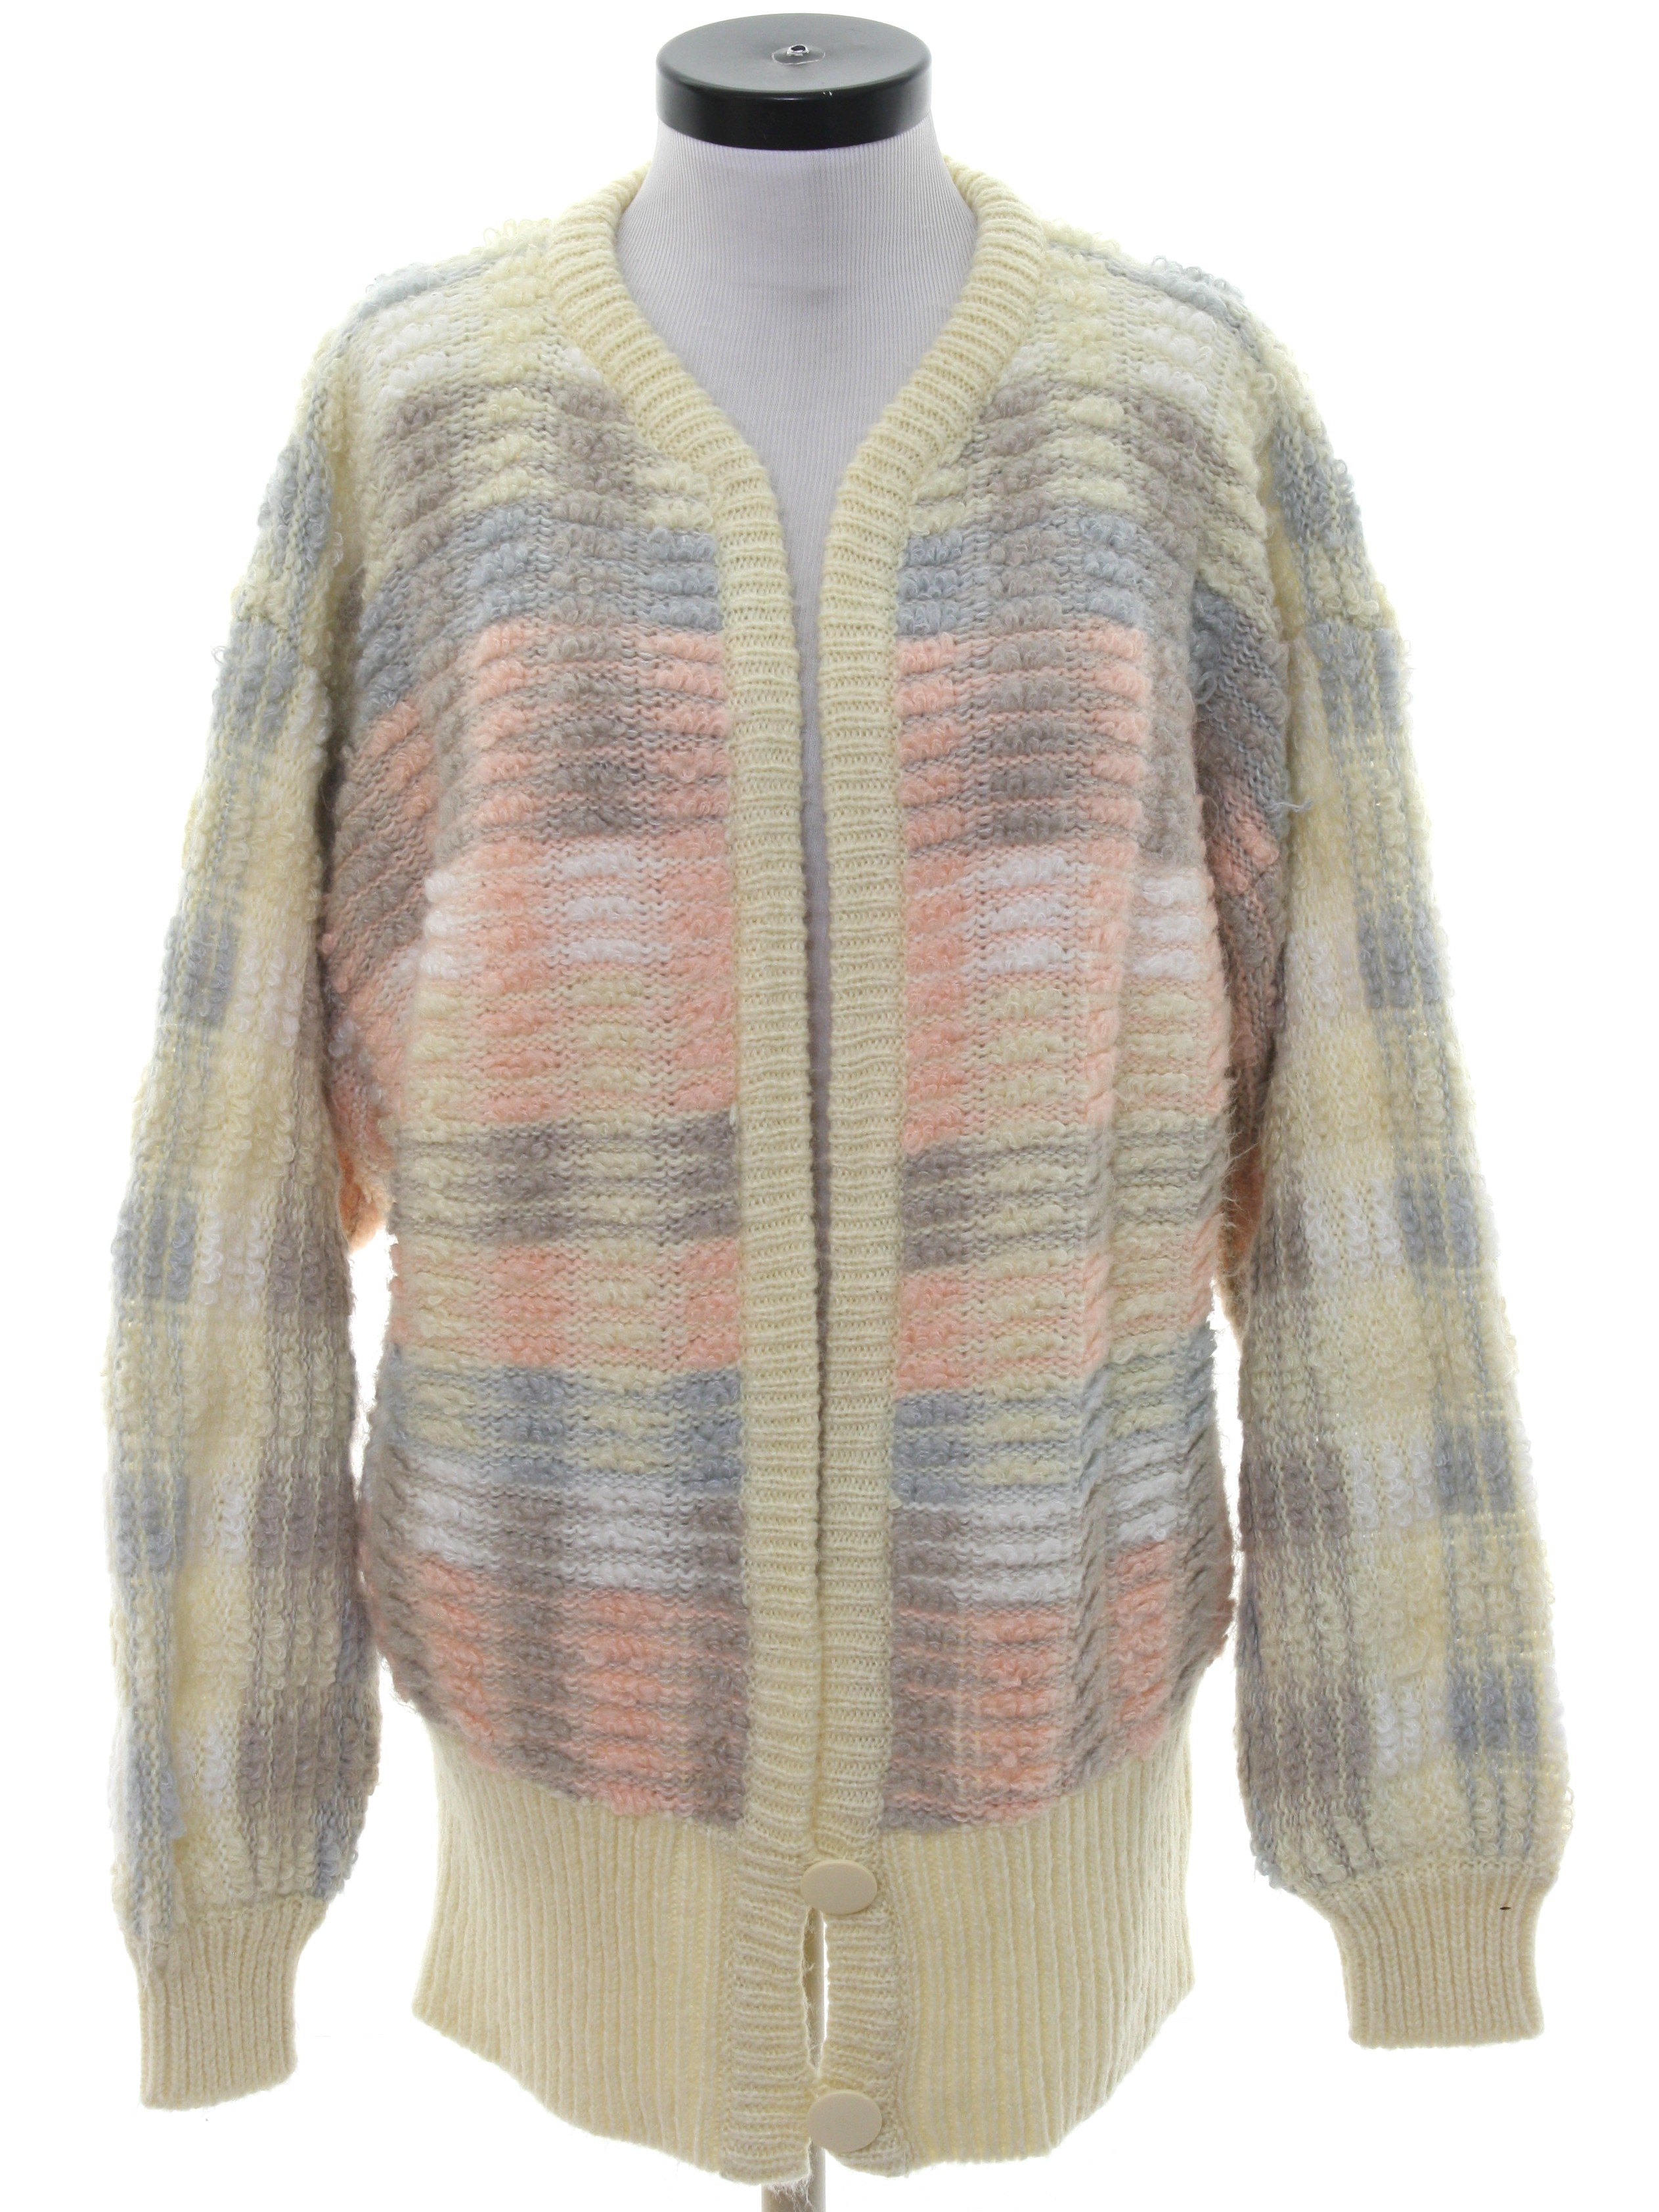 80s Retro Caridgan Sweater: 80s -Lindsay Scott- Womens ivory background